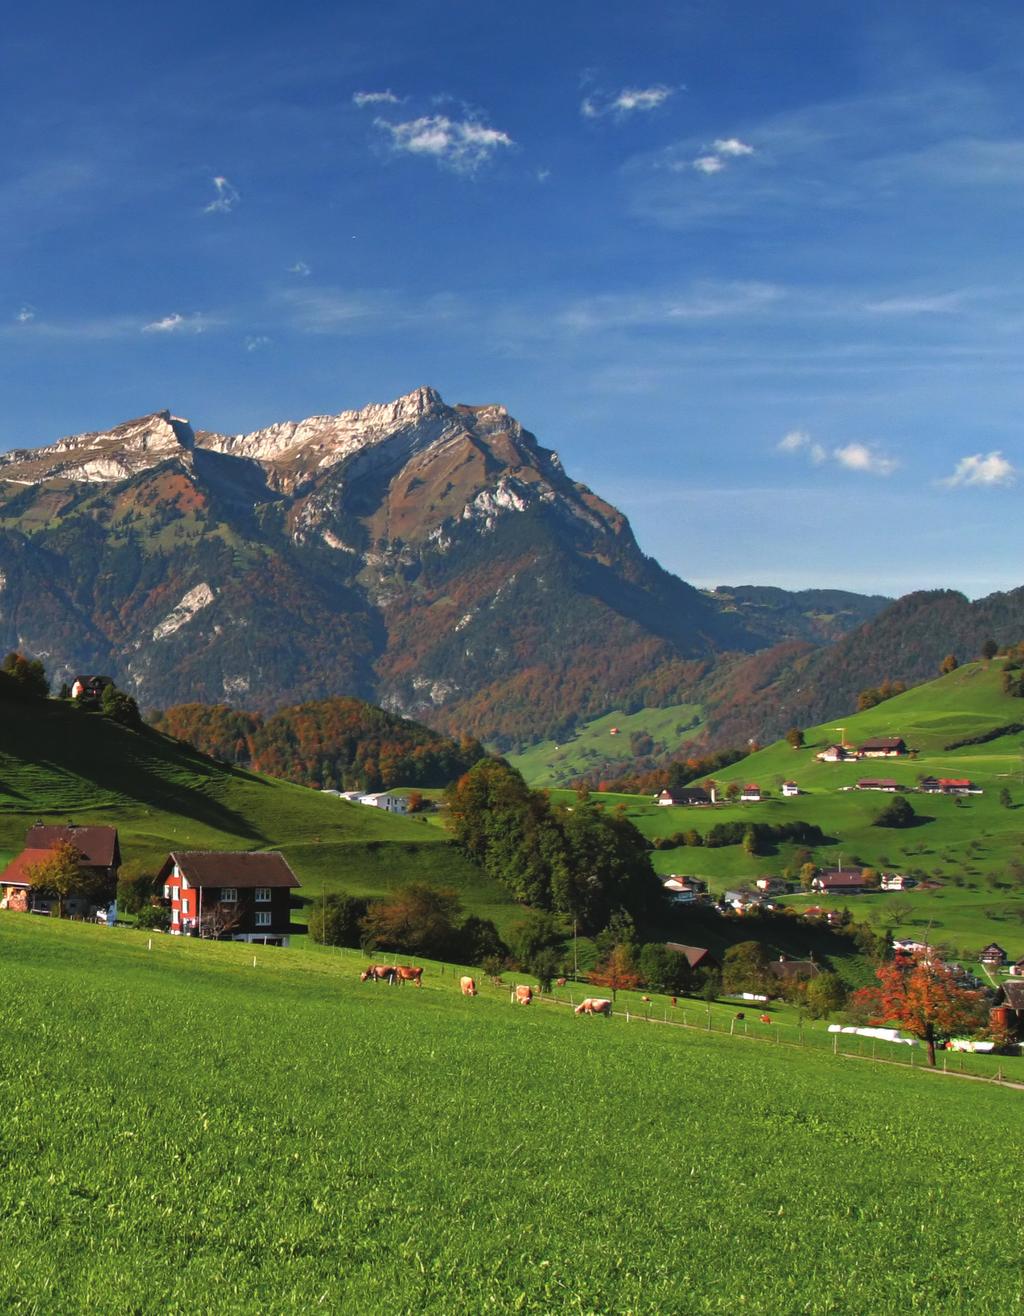 Wednesday: September 20 APPENZELL MURTEN Today after breakfast we will travel to Werdenberg, the smallest town in Switzerland.